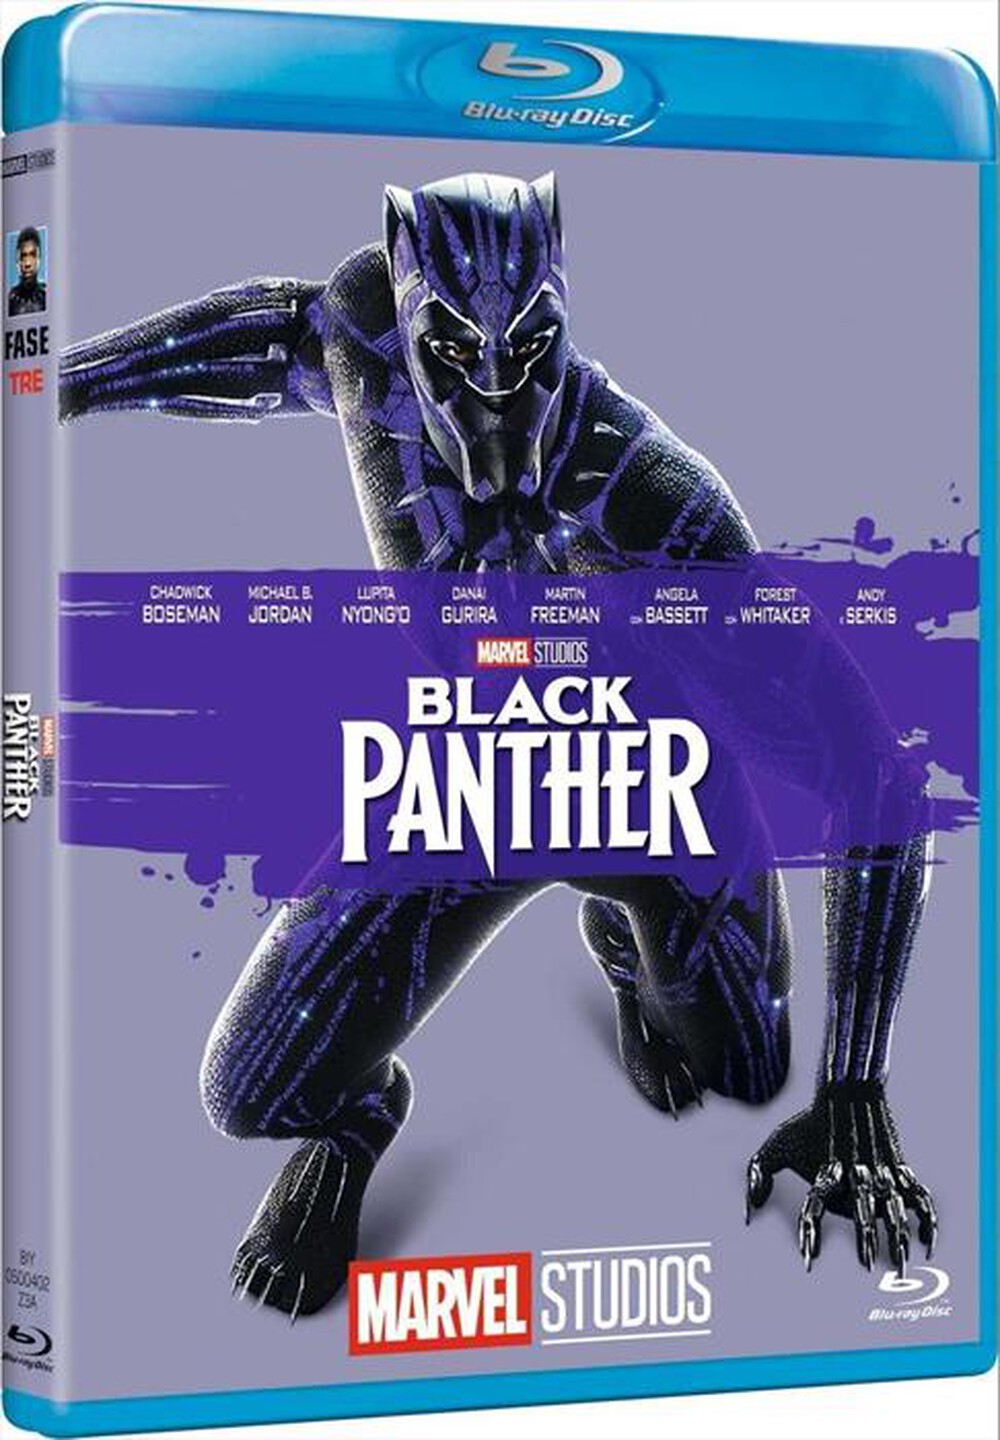 "EAGLE PICTURES - Black Panther (Edizione Marvel Studios 10 Annive"